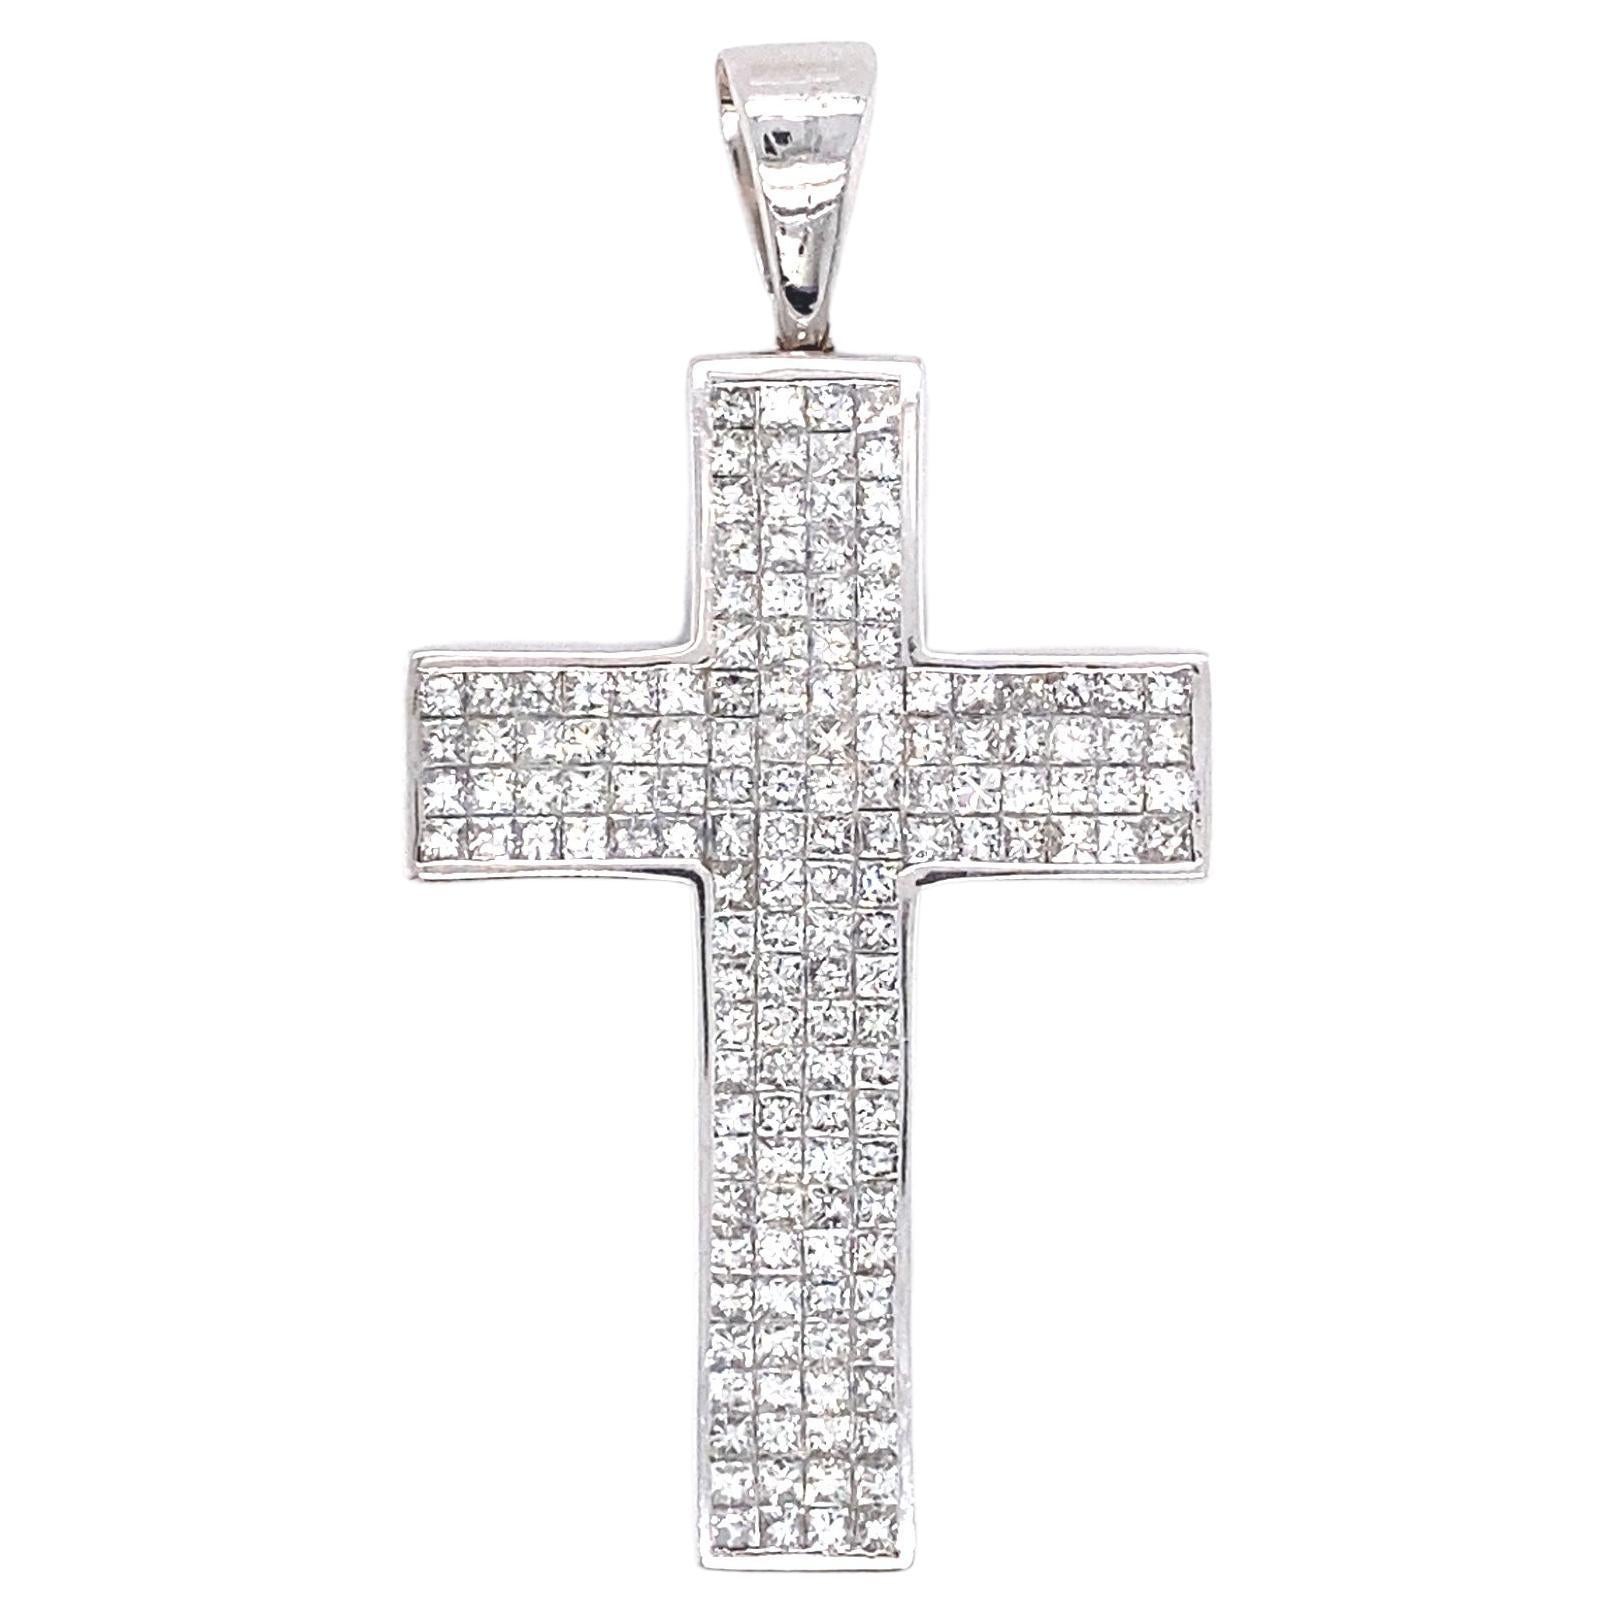 5 Carat Diamond Cross Pendant in 18 Karat White Gold